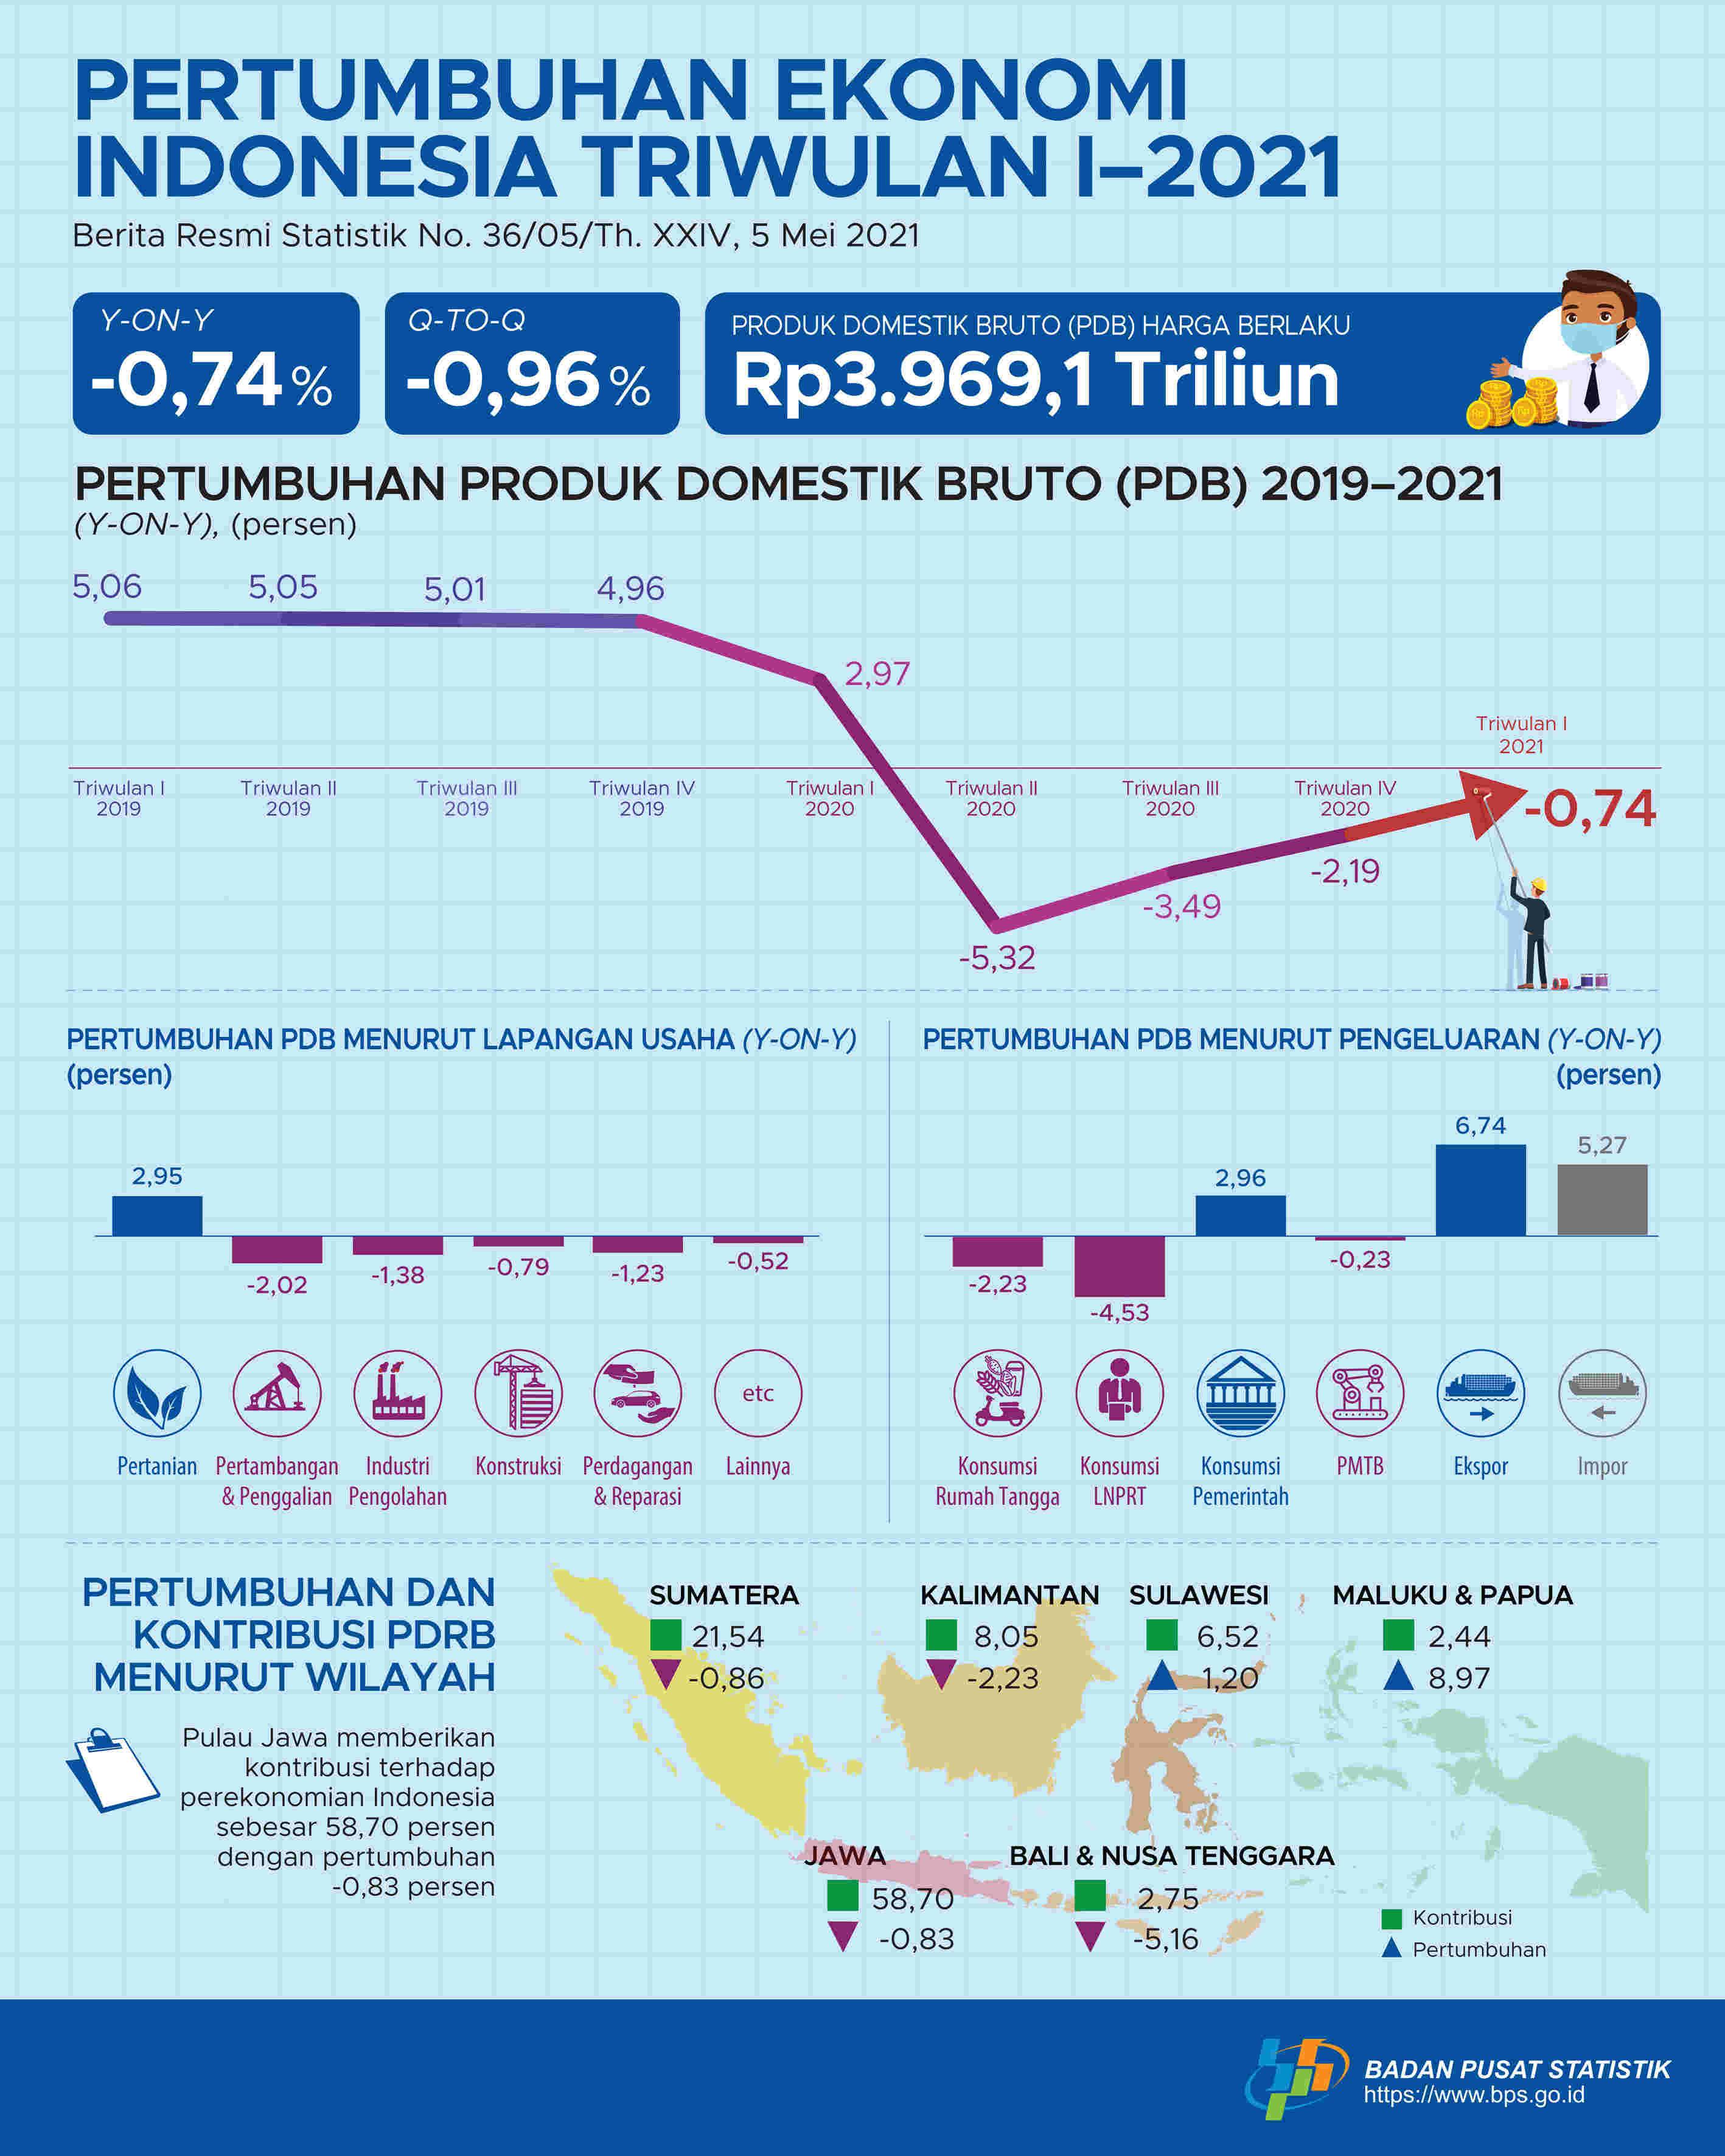 Ekonomi Indonesia Triwulan I-2021 turun 0,74 persen (y-on-y)